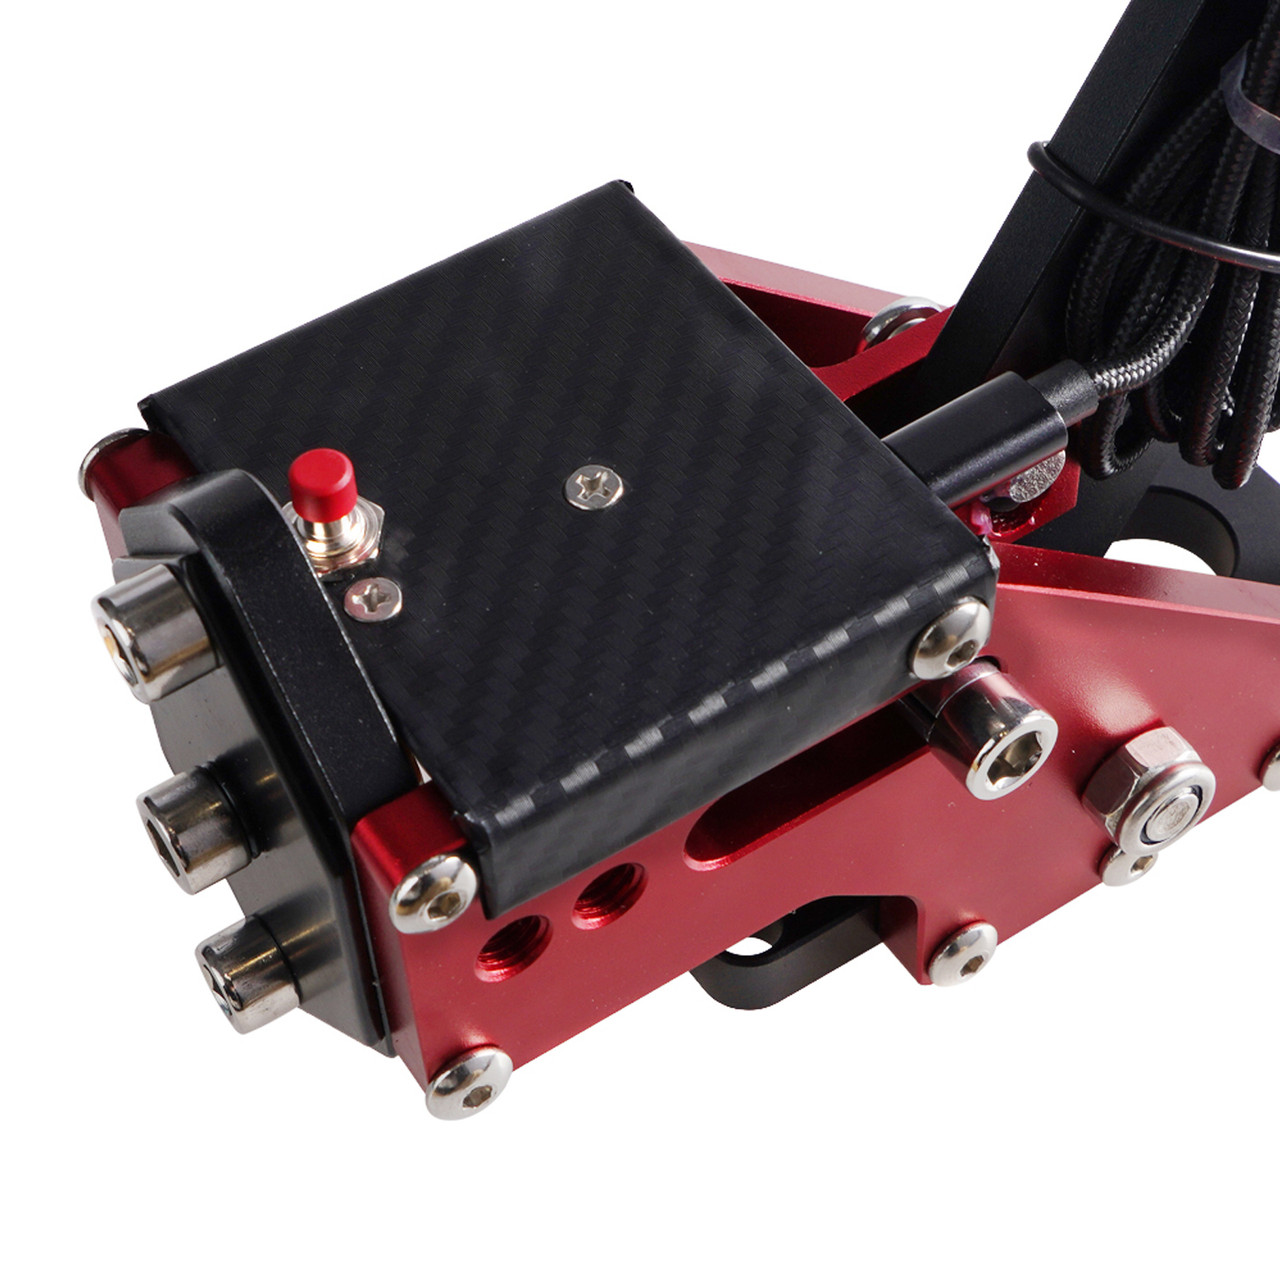 14Bit X1 XSS XBOX SIM Handbrake for Racing Games Steering Wheel Stand G920 Red